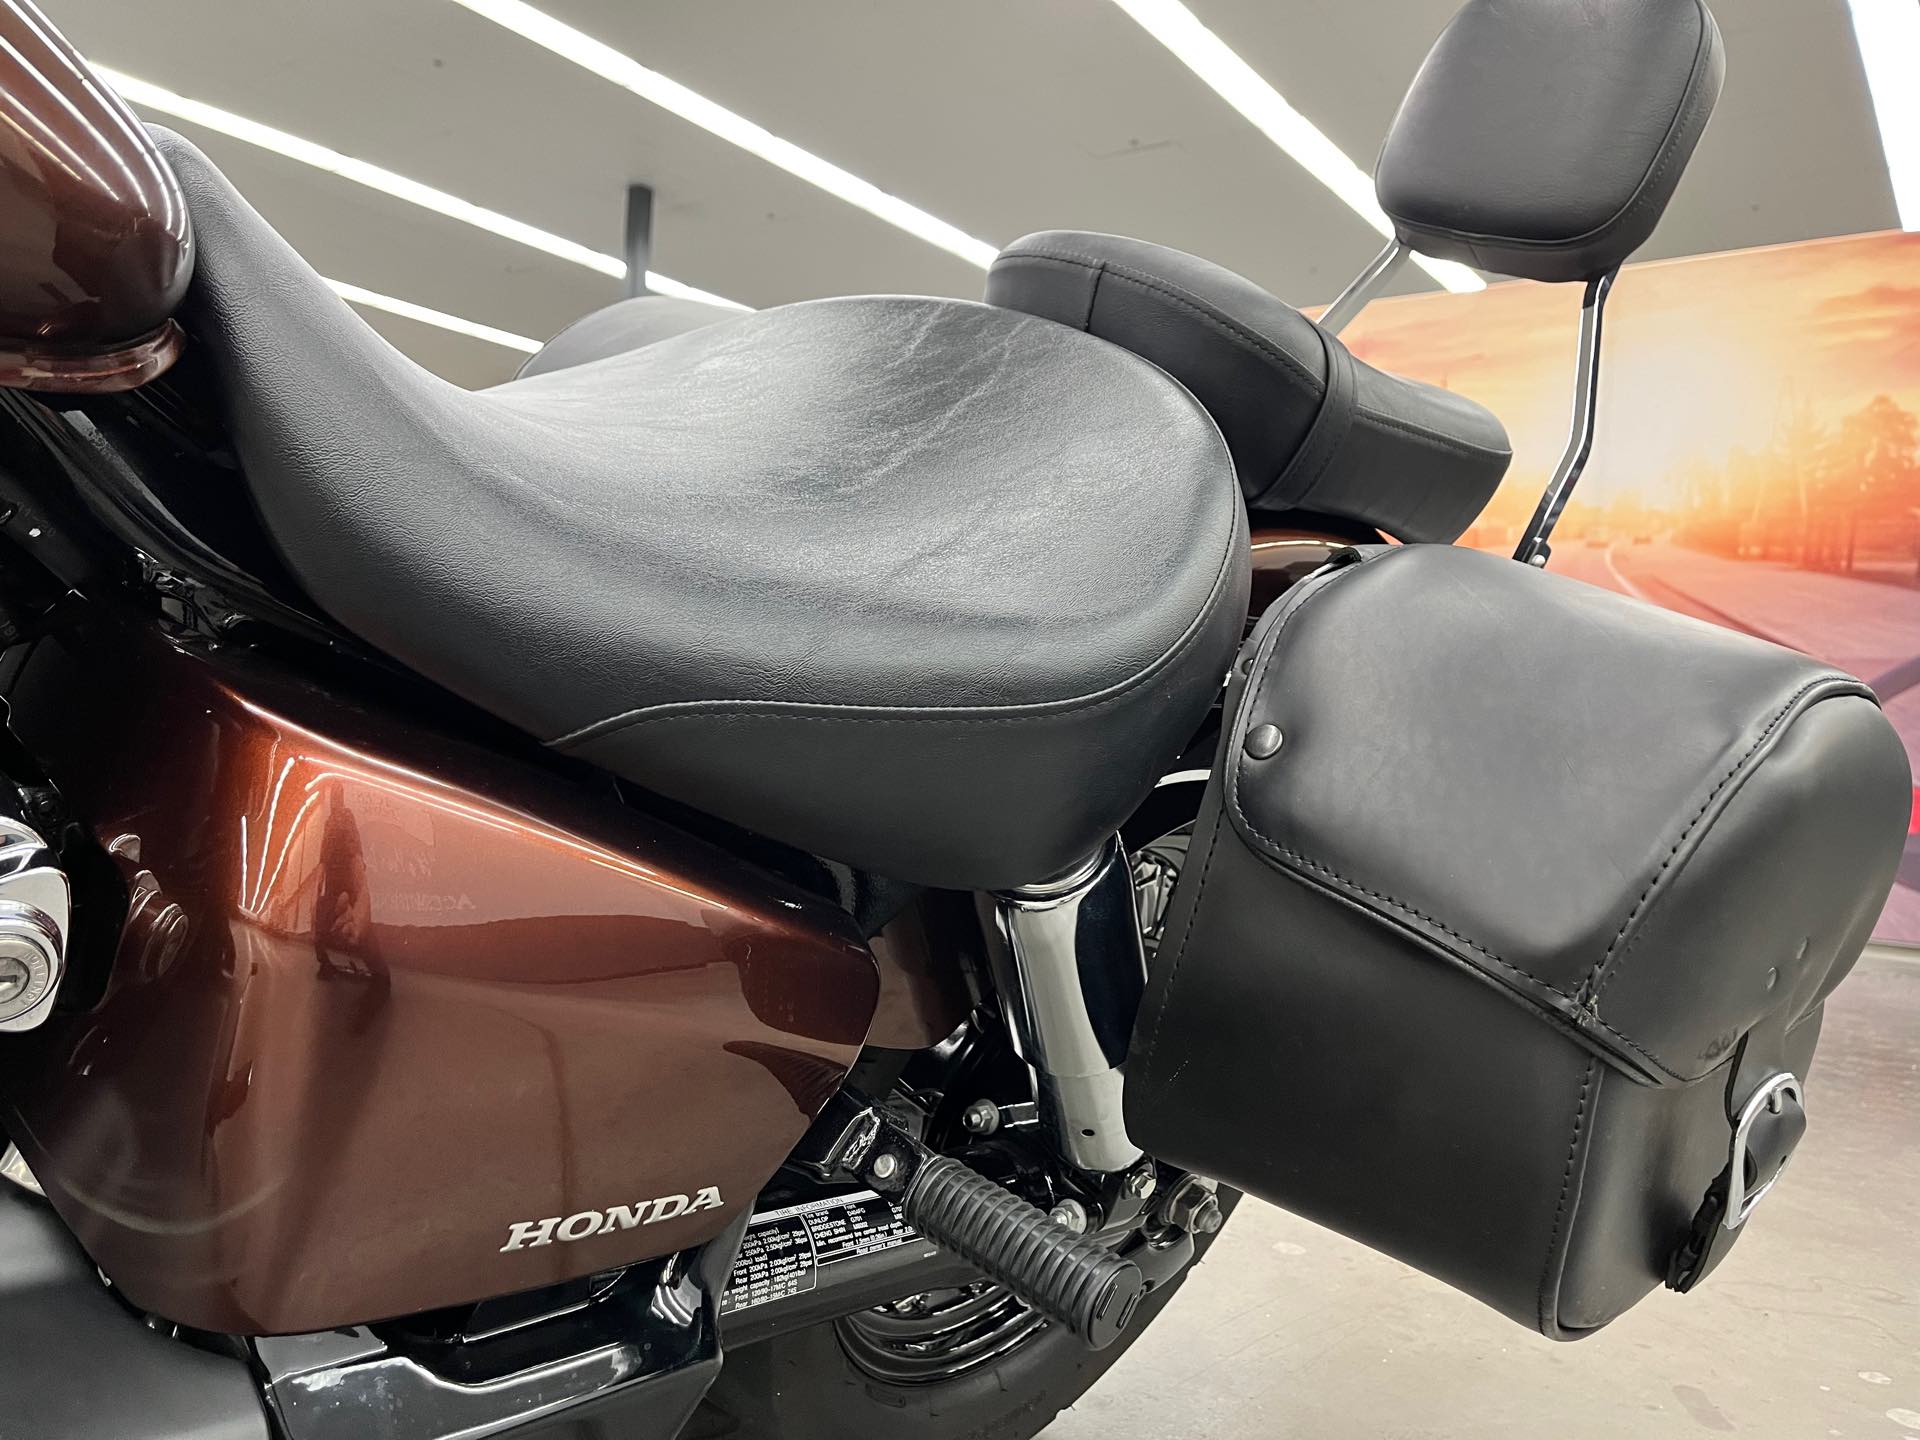 2020 Honda Shadow Aero at Aces Motorcycles - Denver